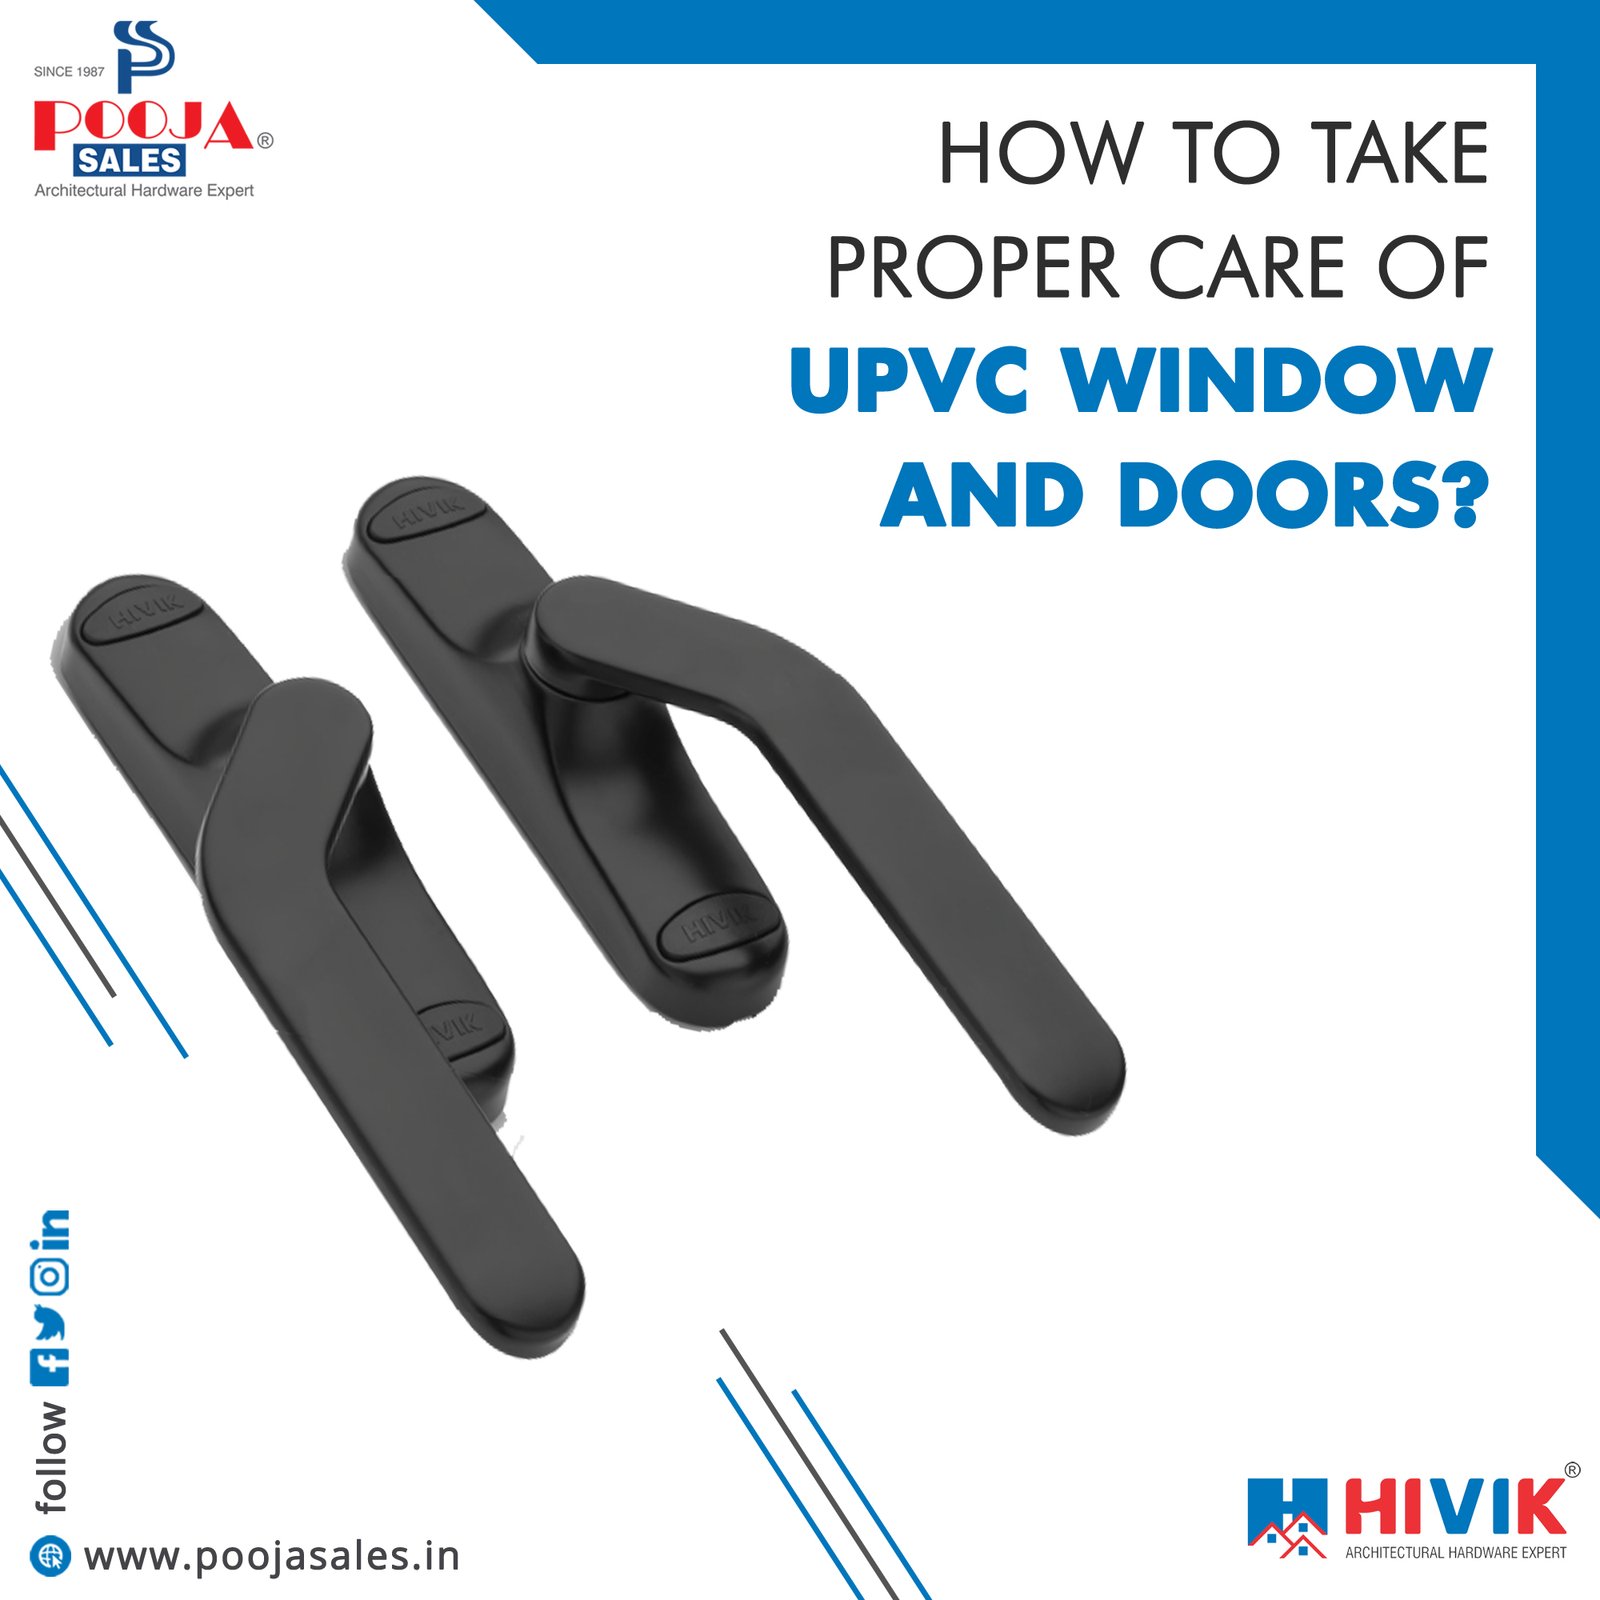 UPVC Doors and Windows